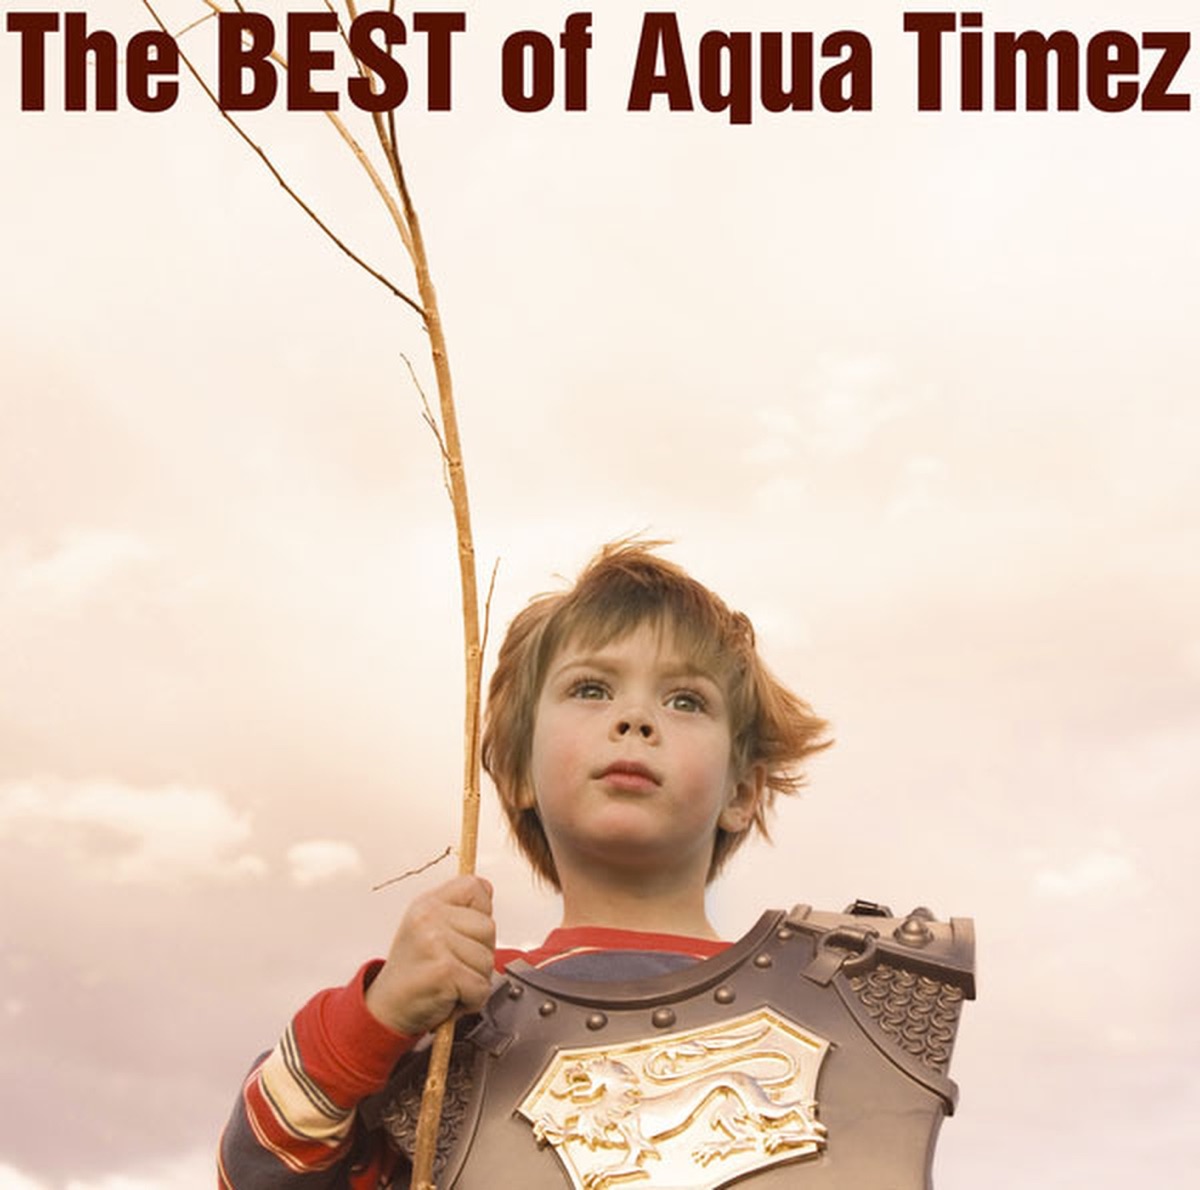 u200eThe BEST of Aqua Timez - Album by Aqua Timez - Apple Music